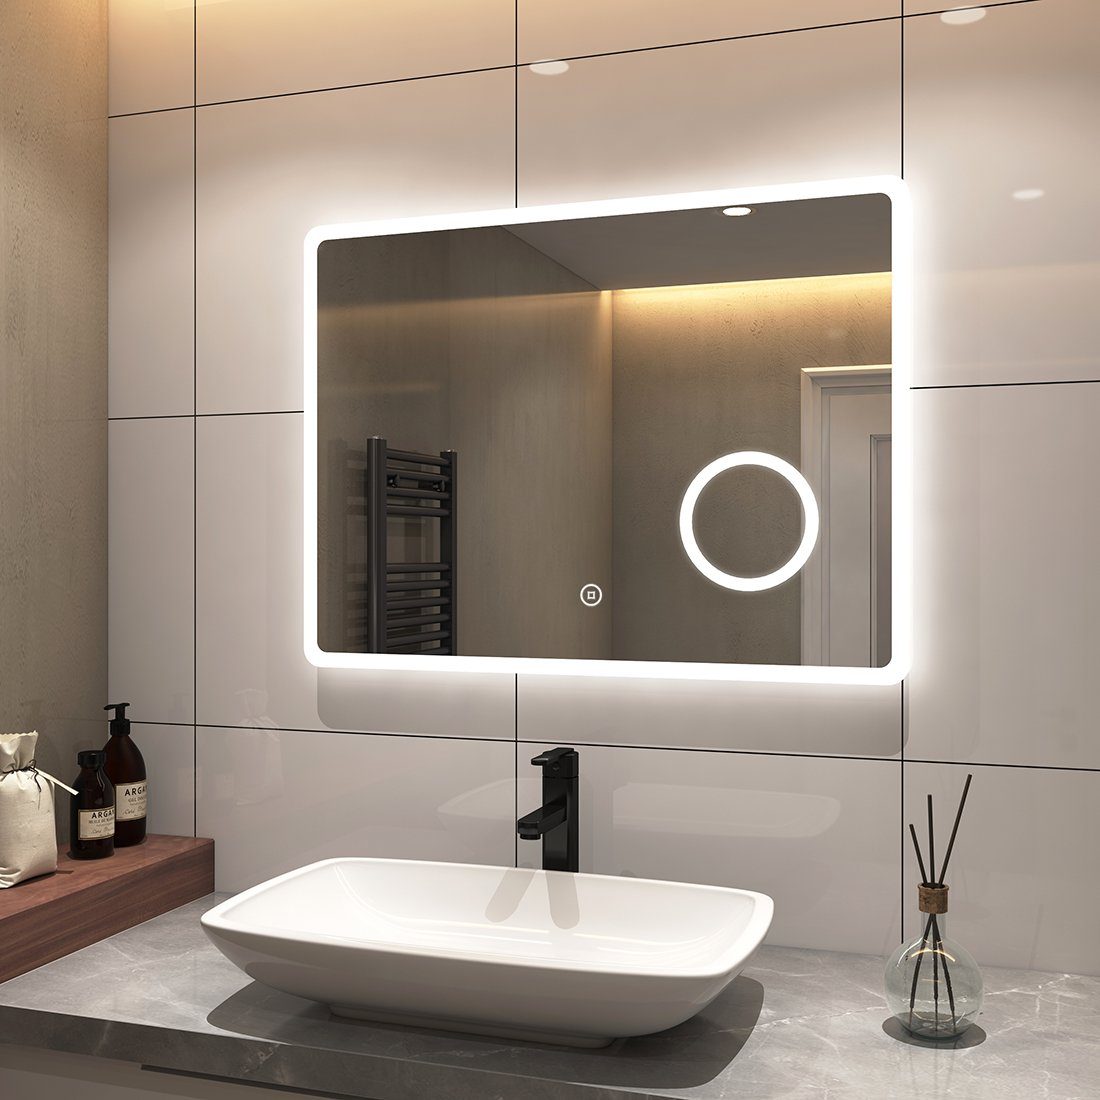 S'AFIELINA Badspiegel Rechteckiger LED Badspiegel mit Beleuchtung Wandspiegel, Touchschalter,3 Lichtfarben,Dimmbar,Beschlagfrei,Energiesparend,IP54